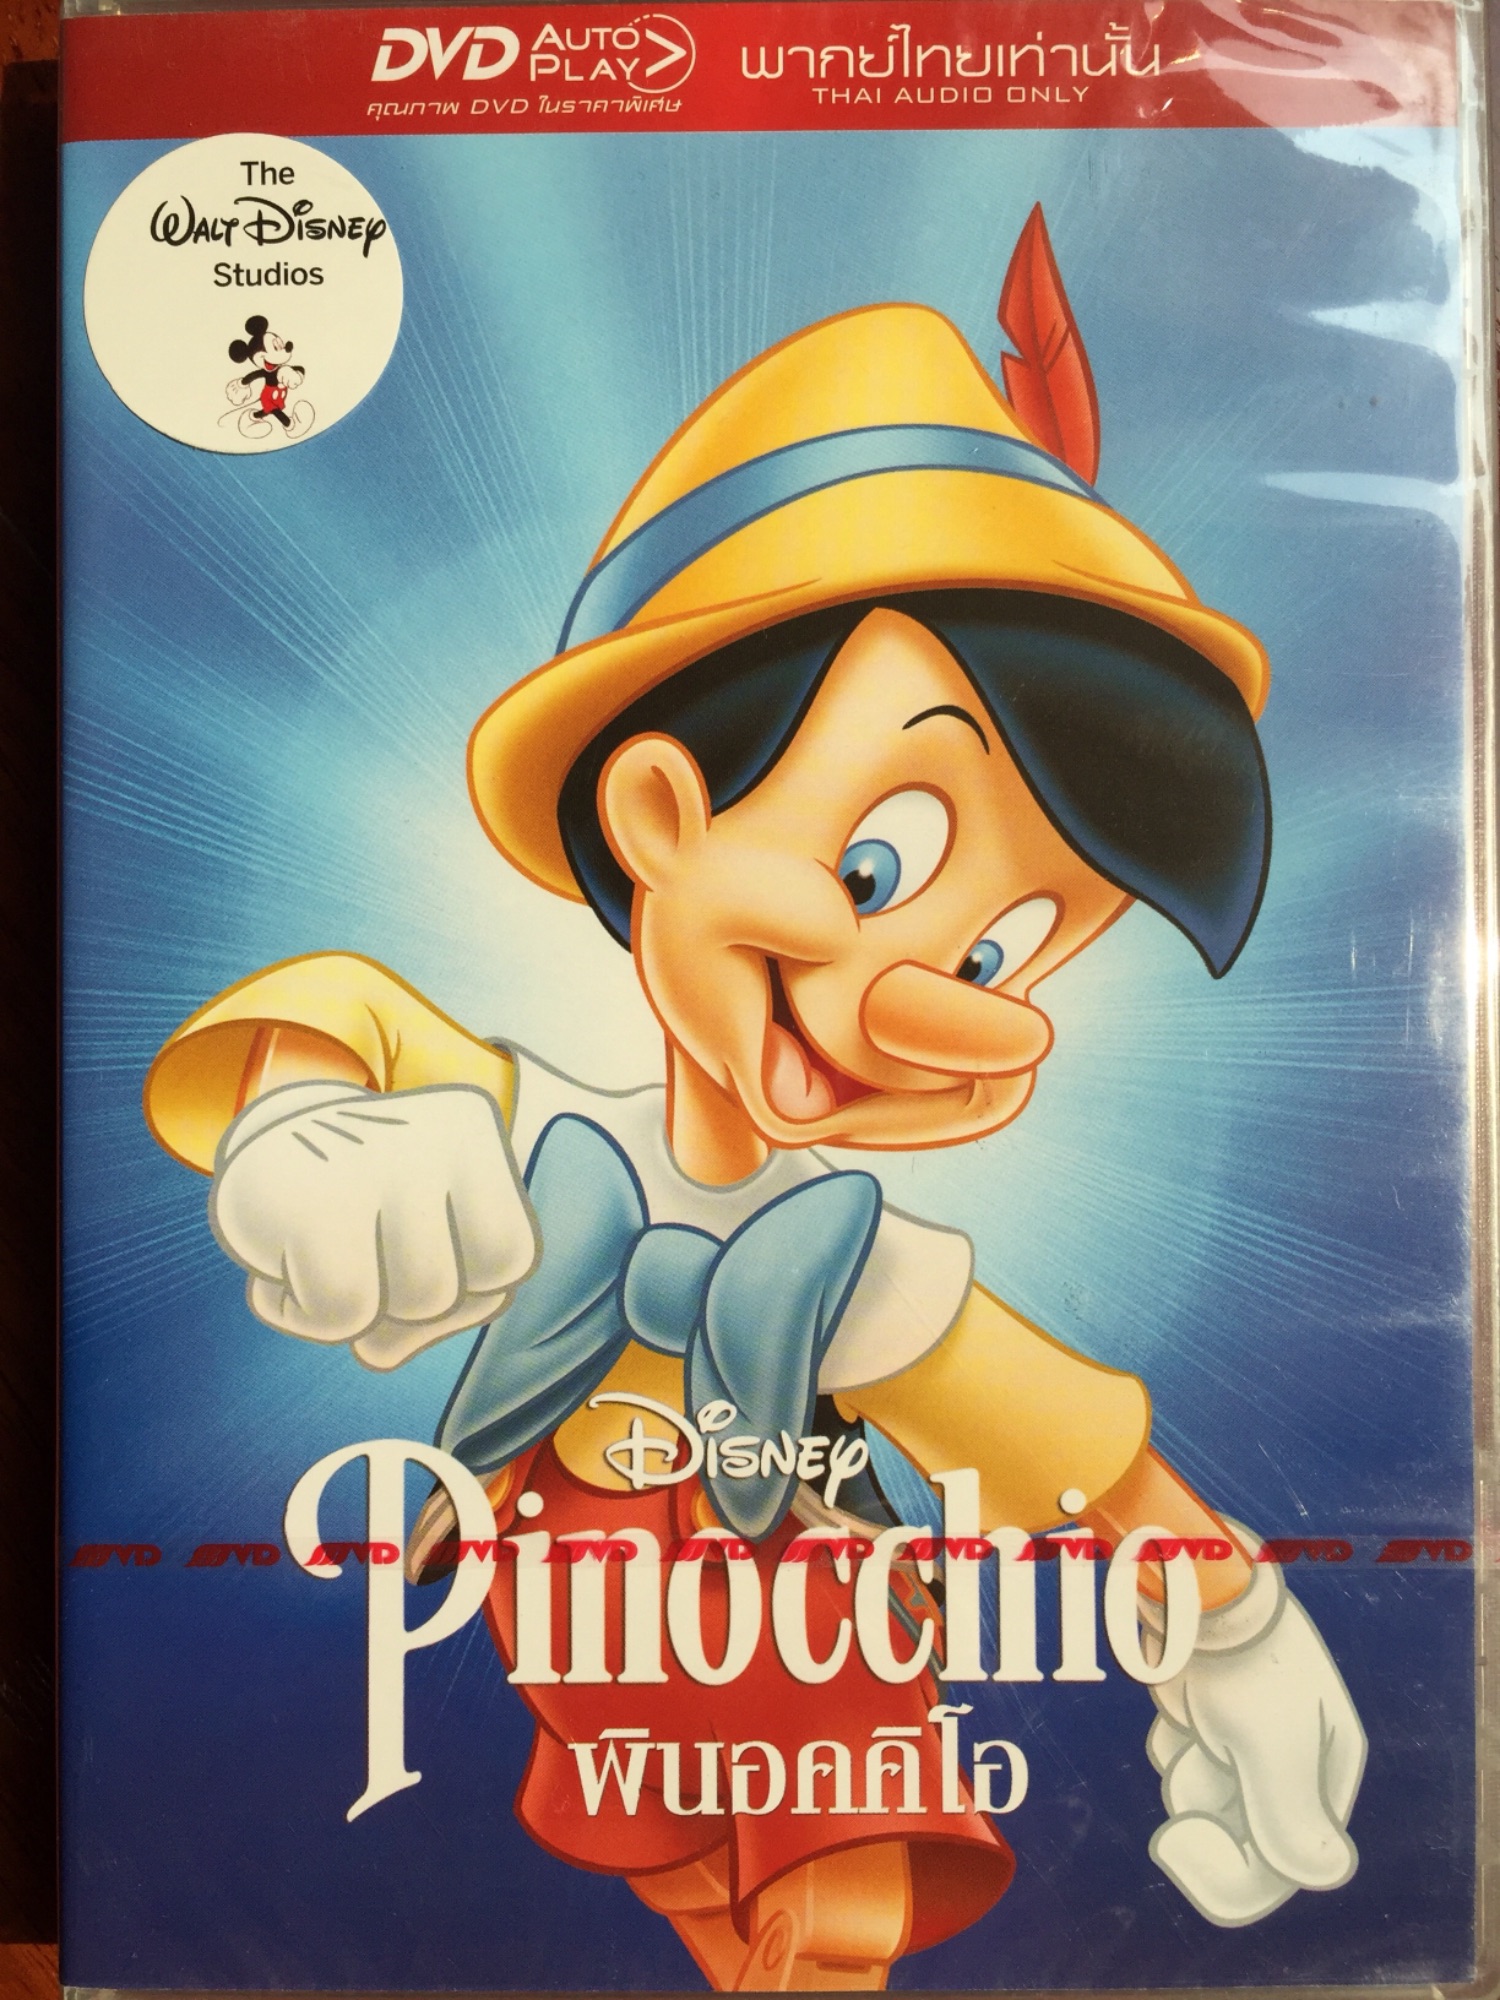 Pinocchio (DVD Thai audio only) - พินอคคิโอ (ฉบับพากย์ไทยเท่านั้น)